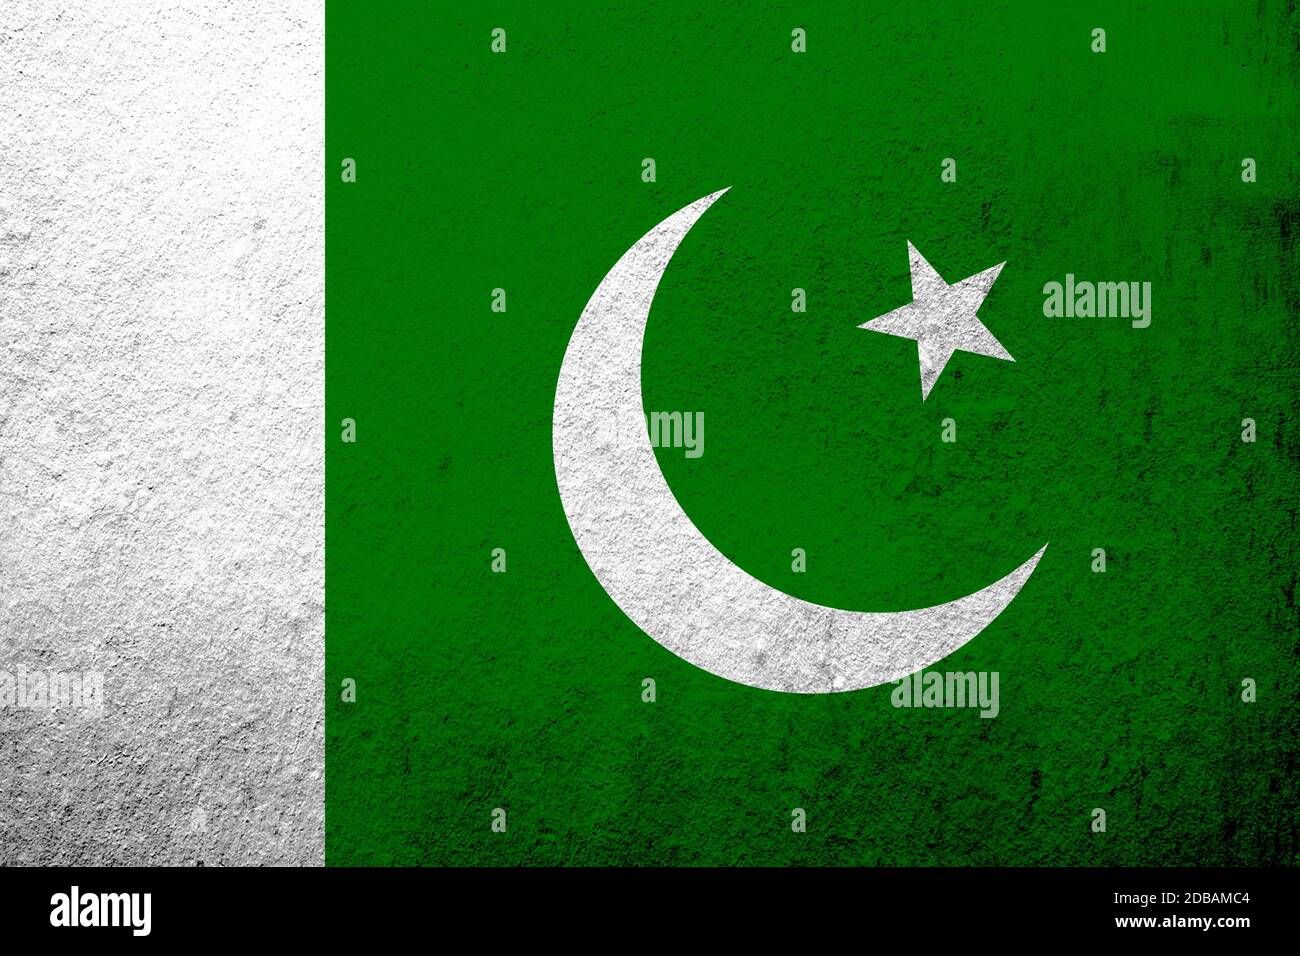 the Islamic Republic of Pakistan National flag. Grunge background Stock Photo